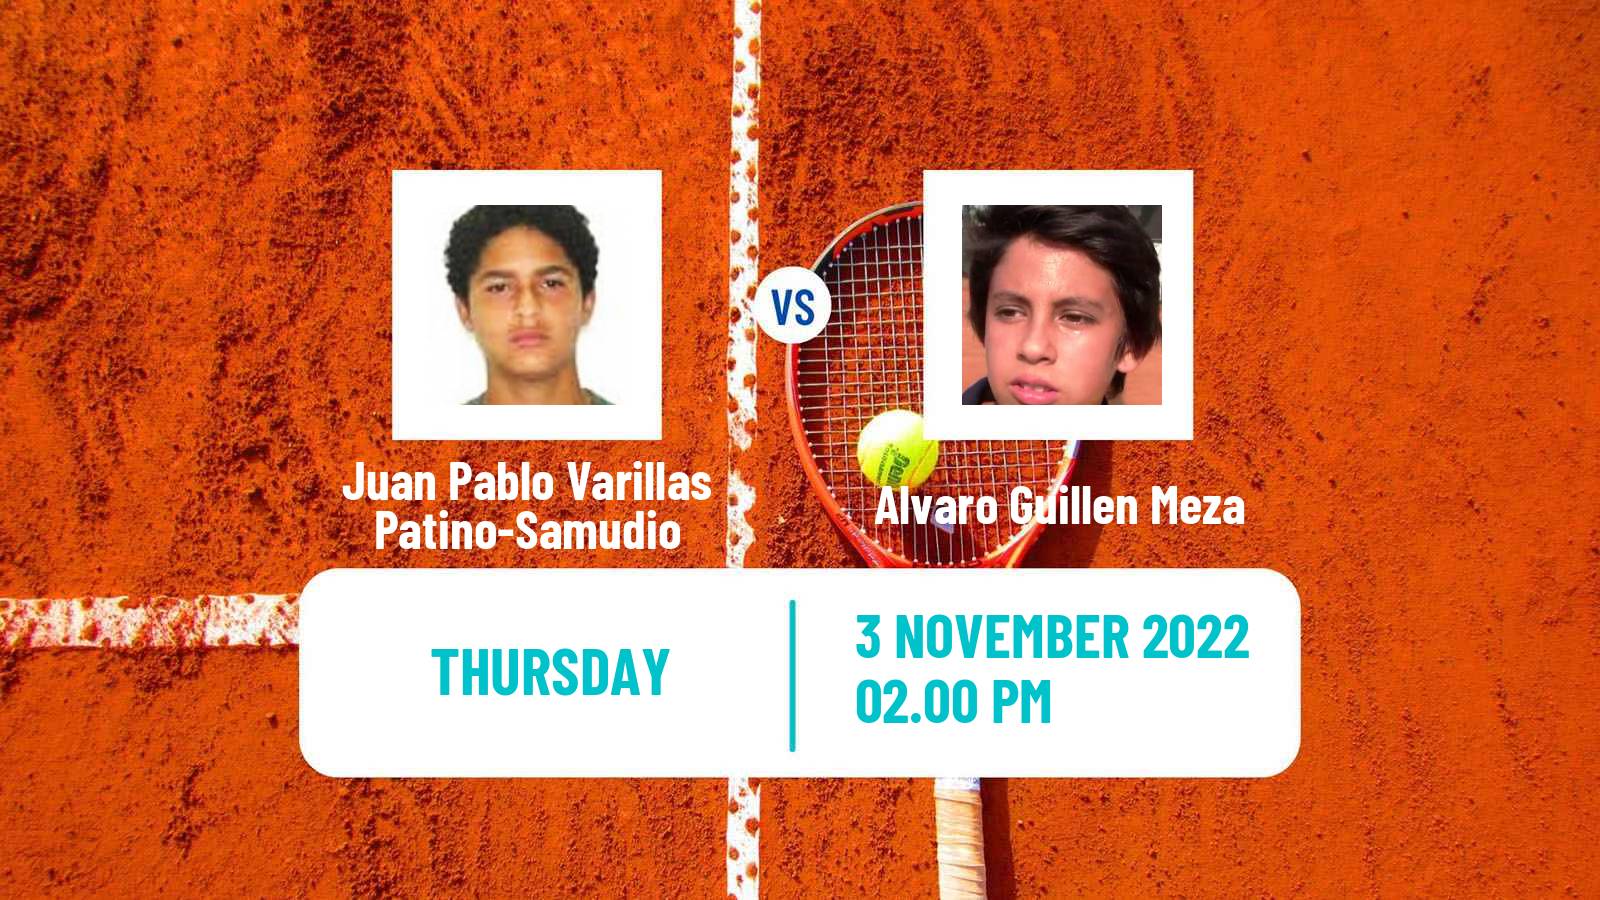 Tennis ATP Challenger Juan Pablo Varillas Patino-Samudio - Alvaro Guillen Meza